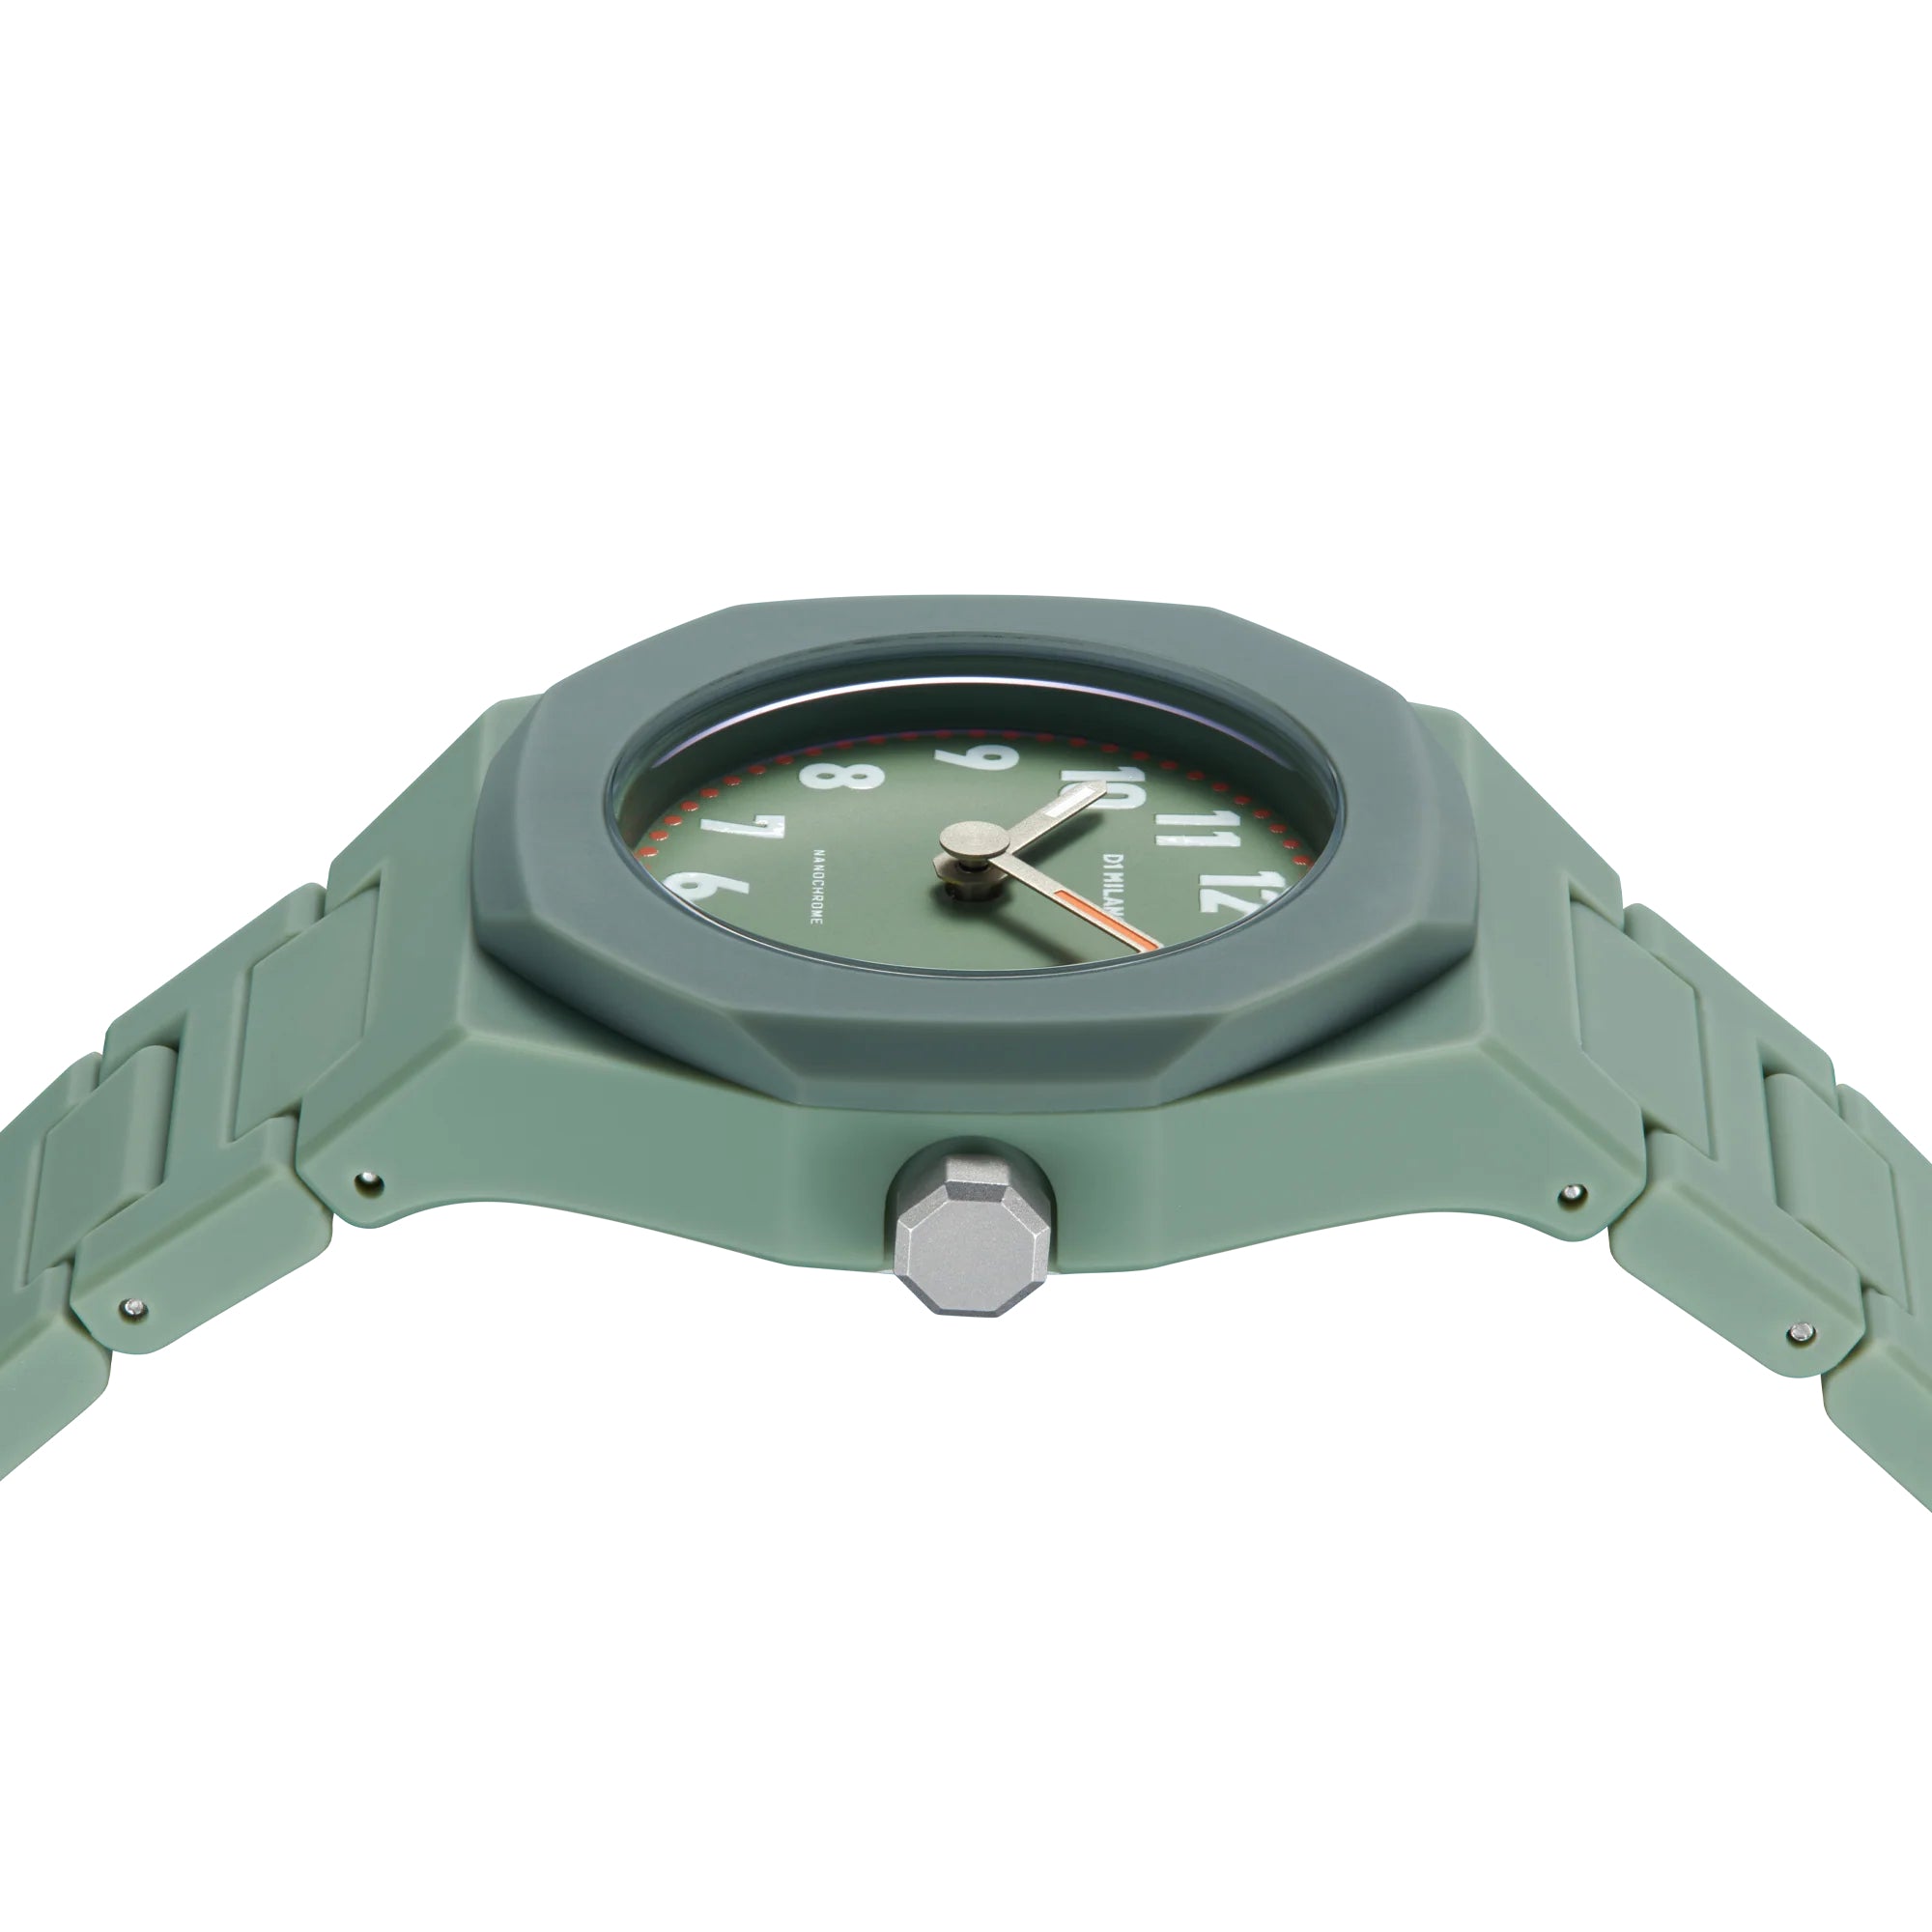 D1 Milano Quartz Watch with Green Dial - ML-0341